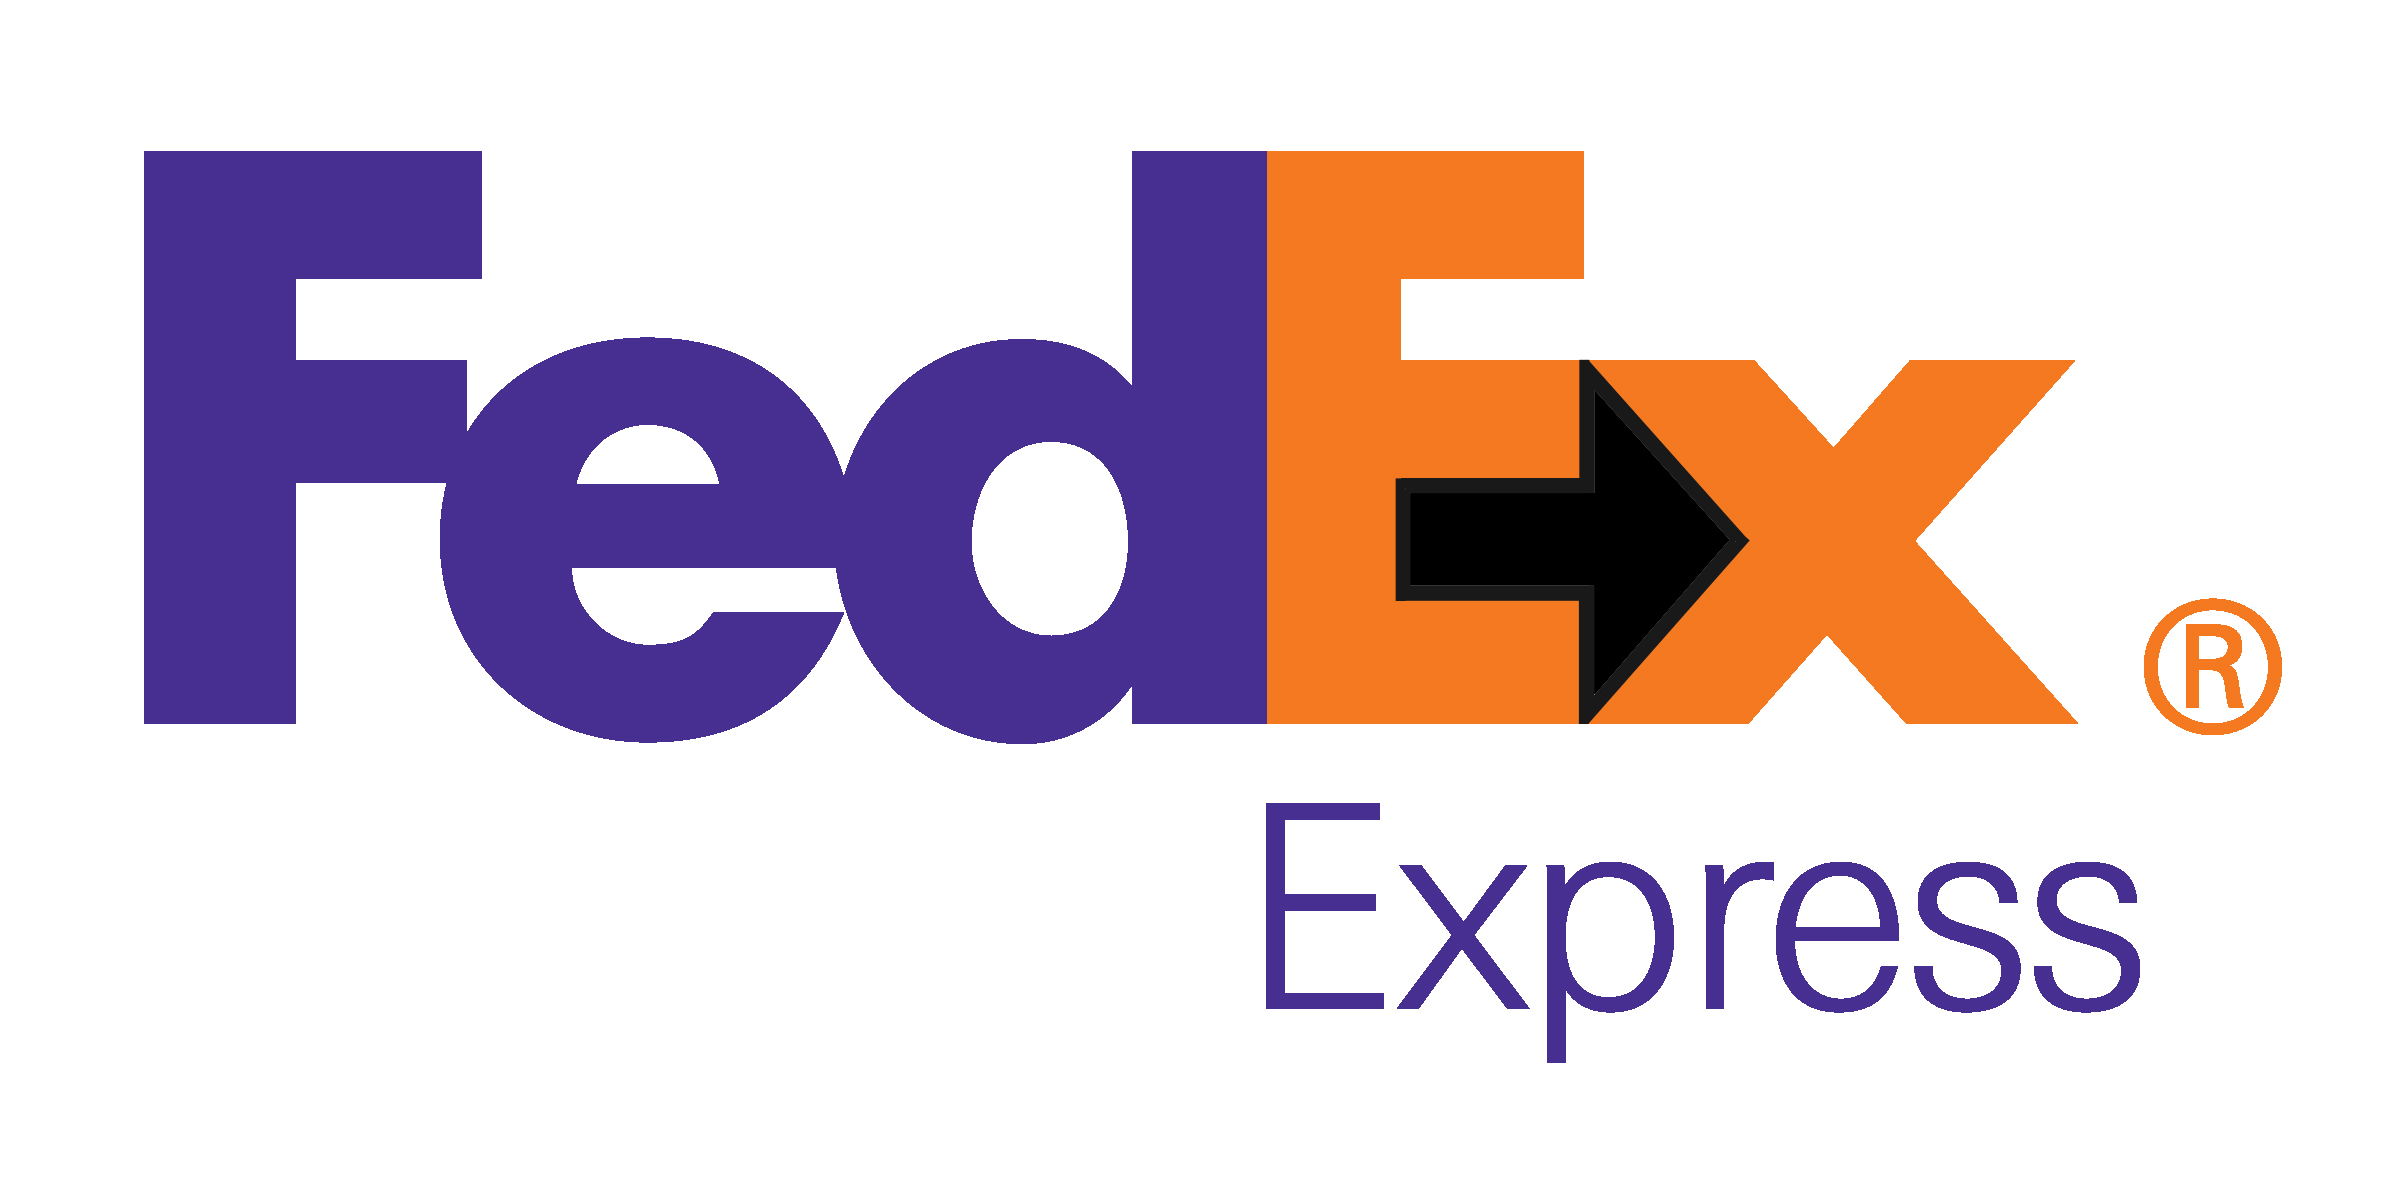 Fedex Working Hard Getting Your Hemp Sense Products to Your Door